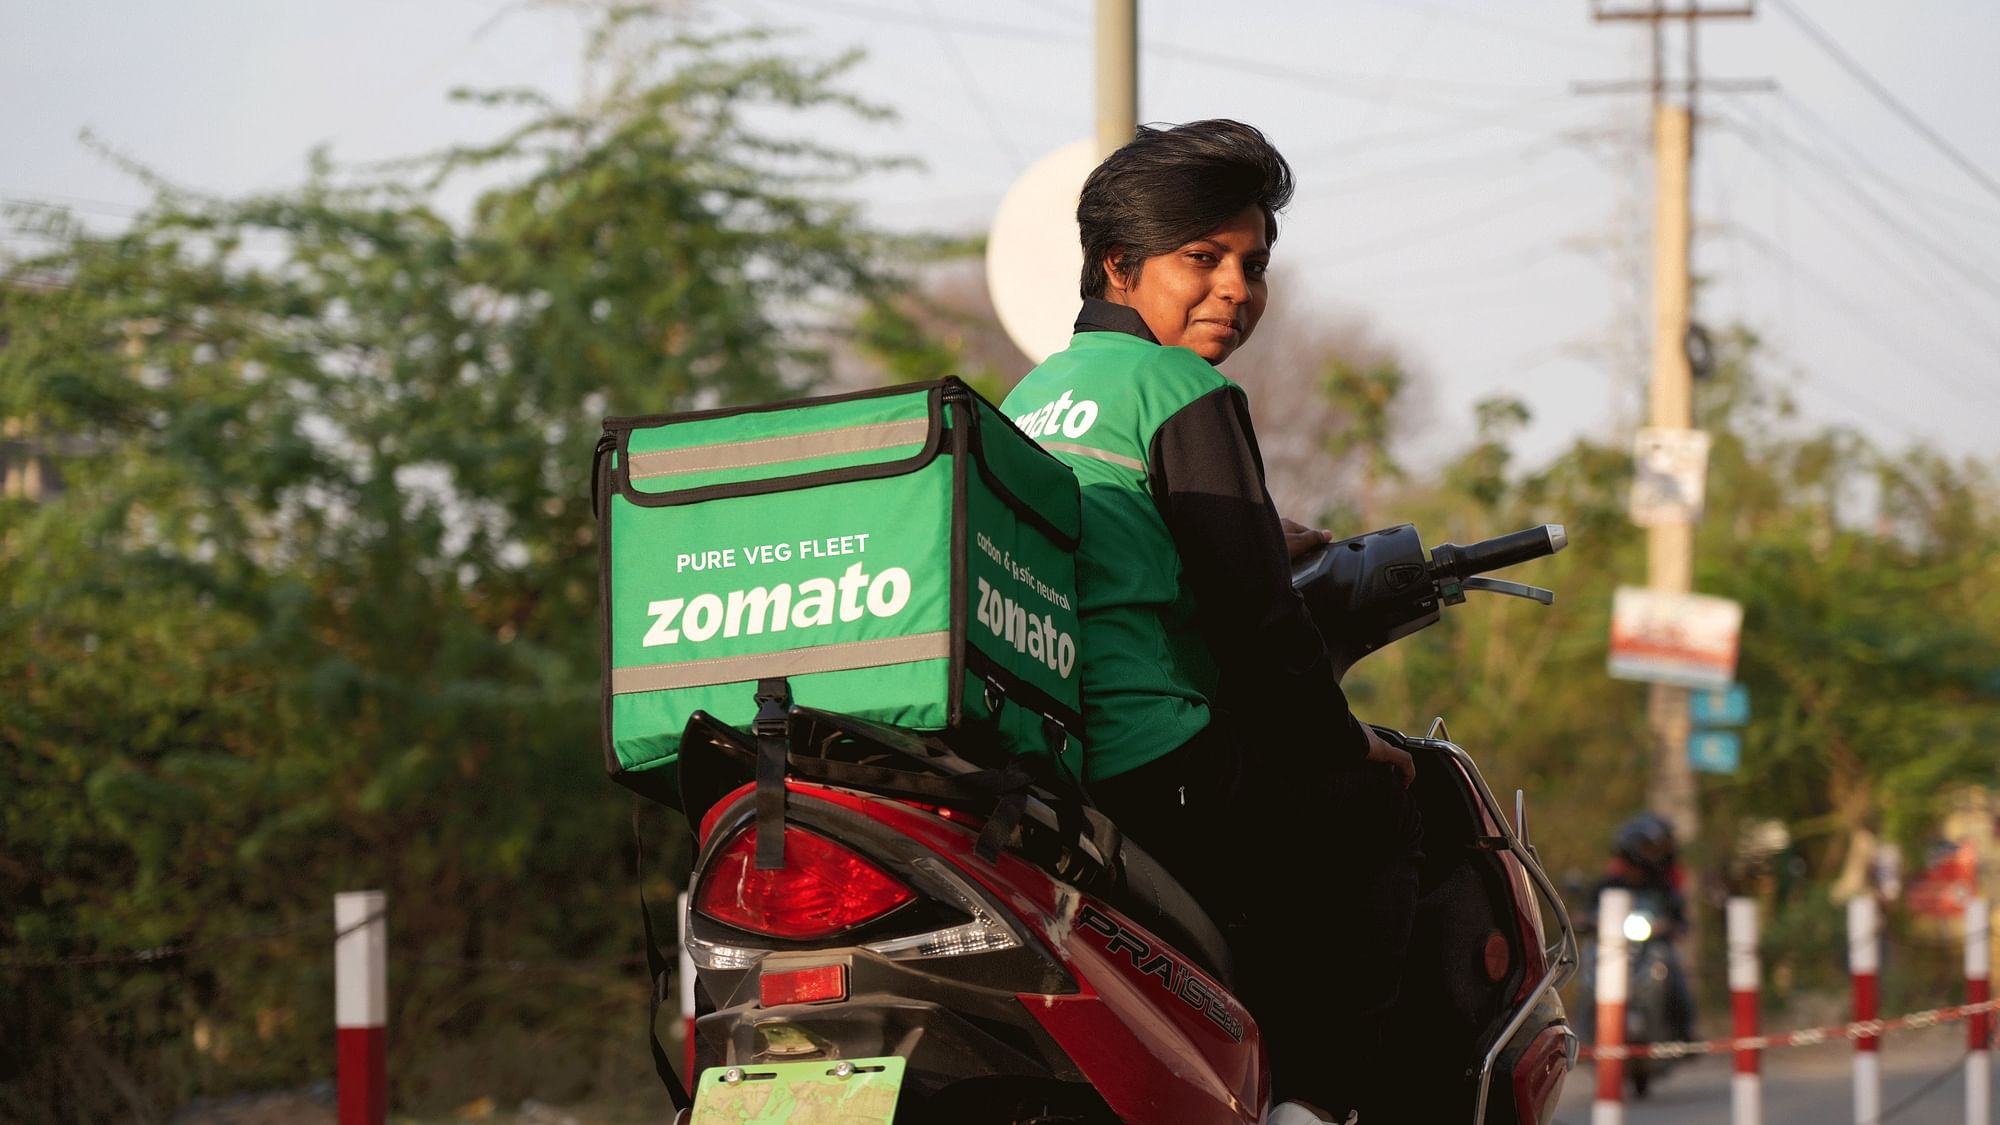 <div class="paragraphs"><p>Zomato launches its new "pure veg" delivery fleet.</p></div>